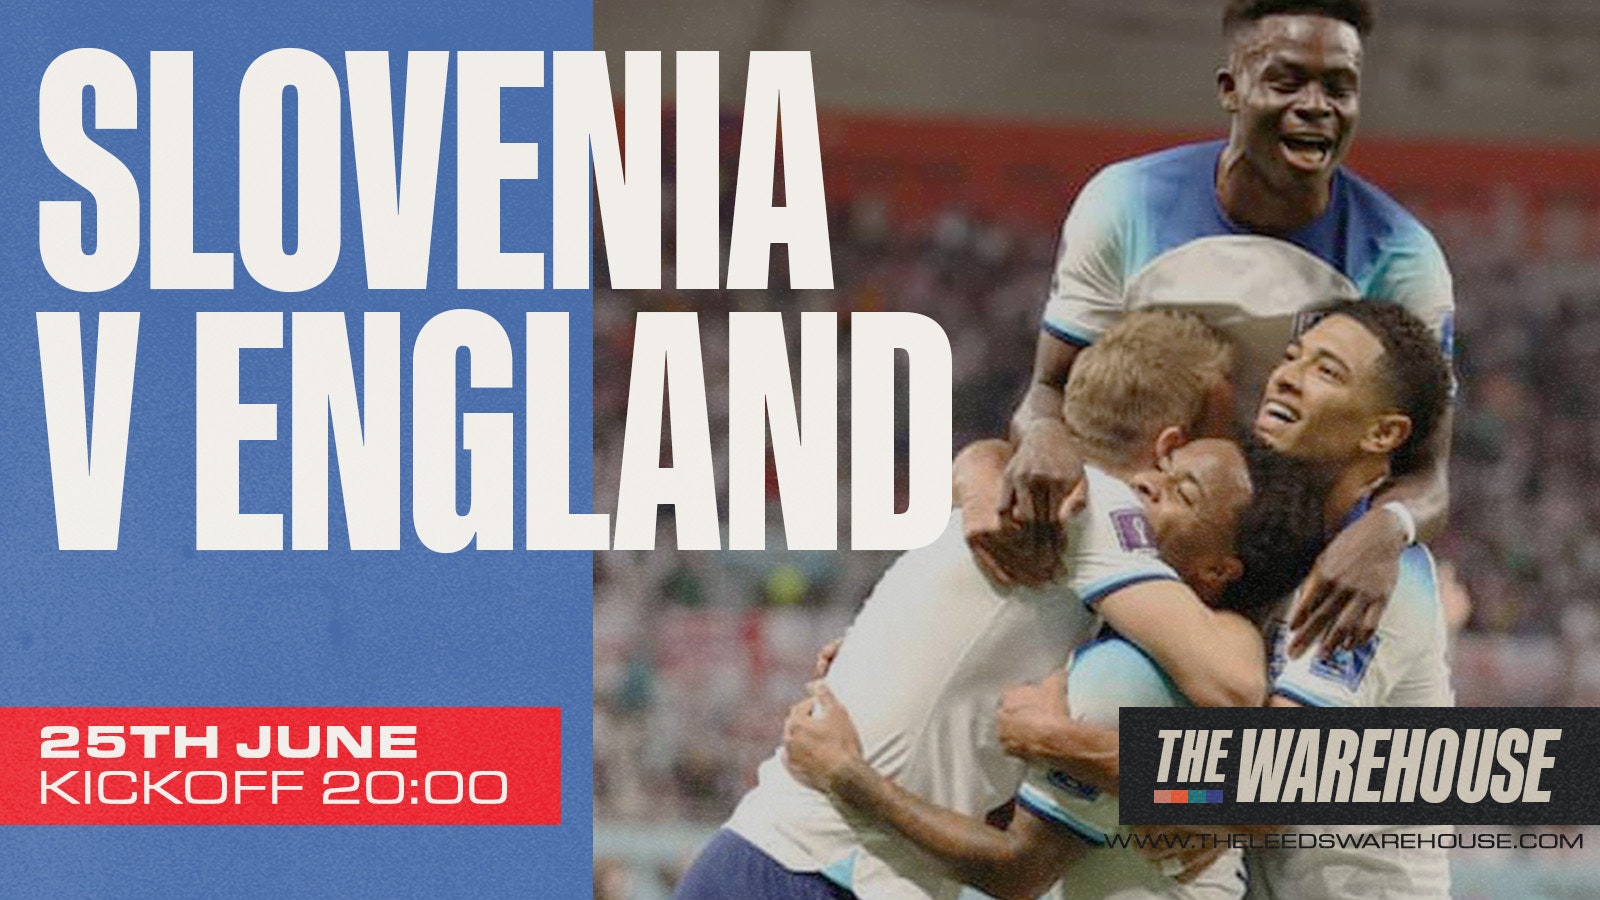 Euros: England vs Slovenia